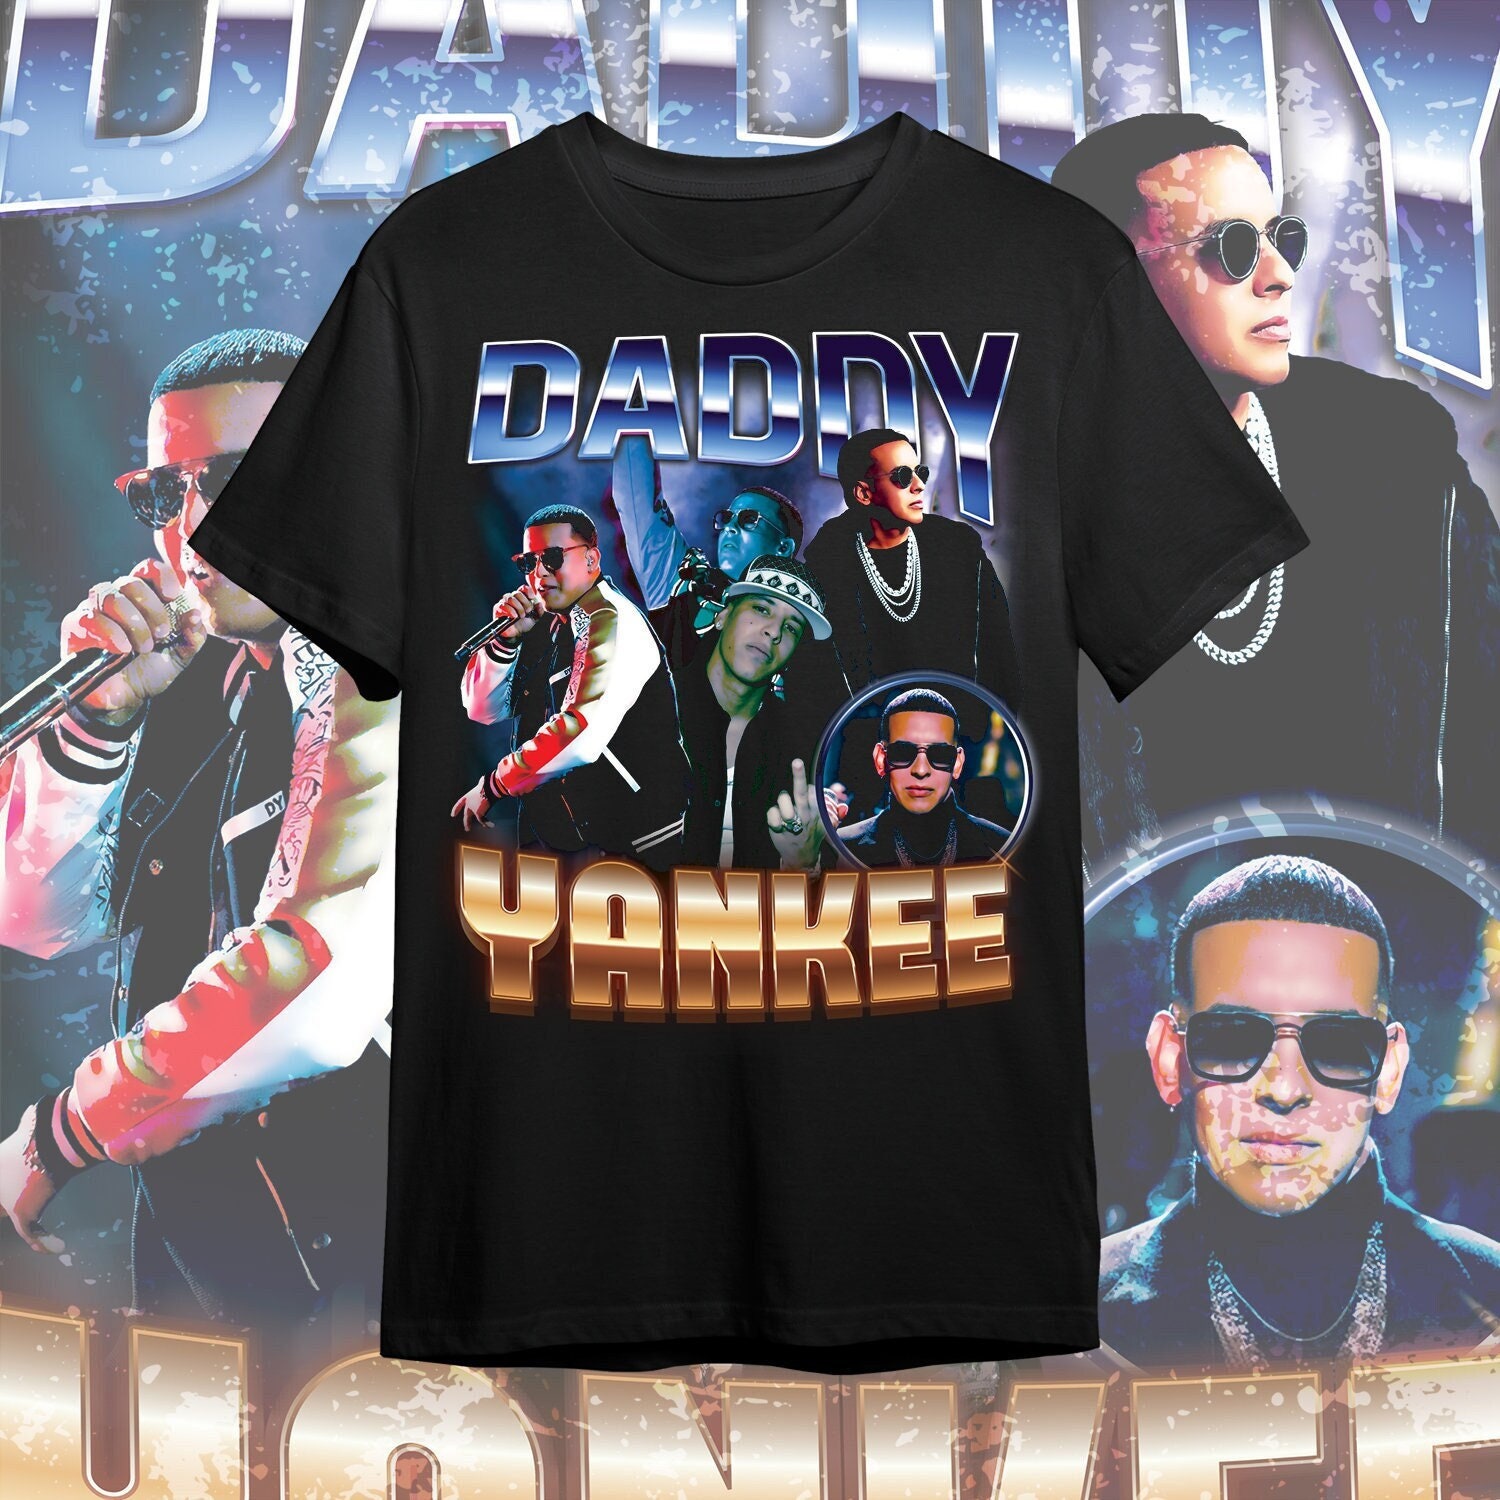 Daddy Yankee Bootleg Shirt Png 90s Shirt Png Printable 